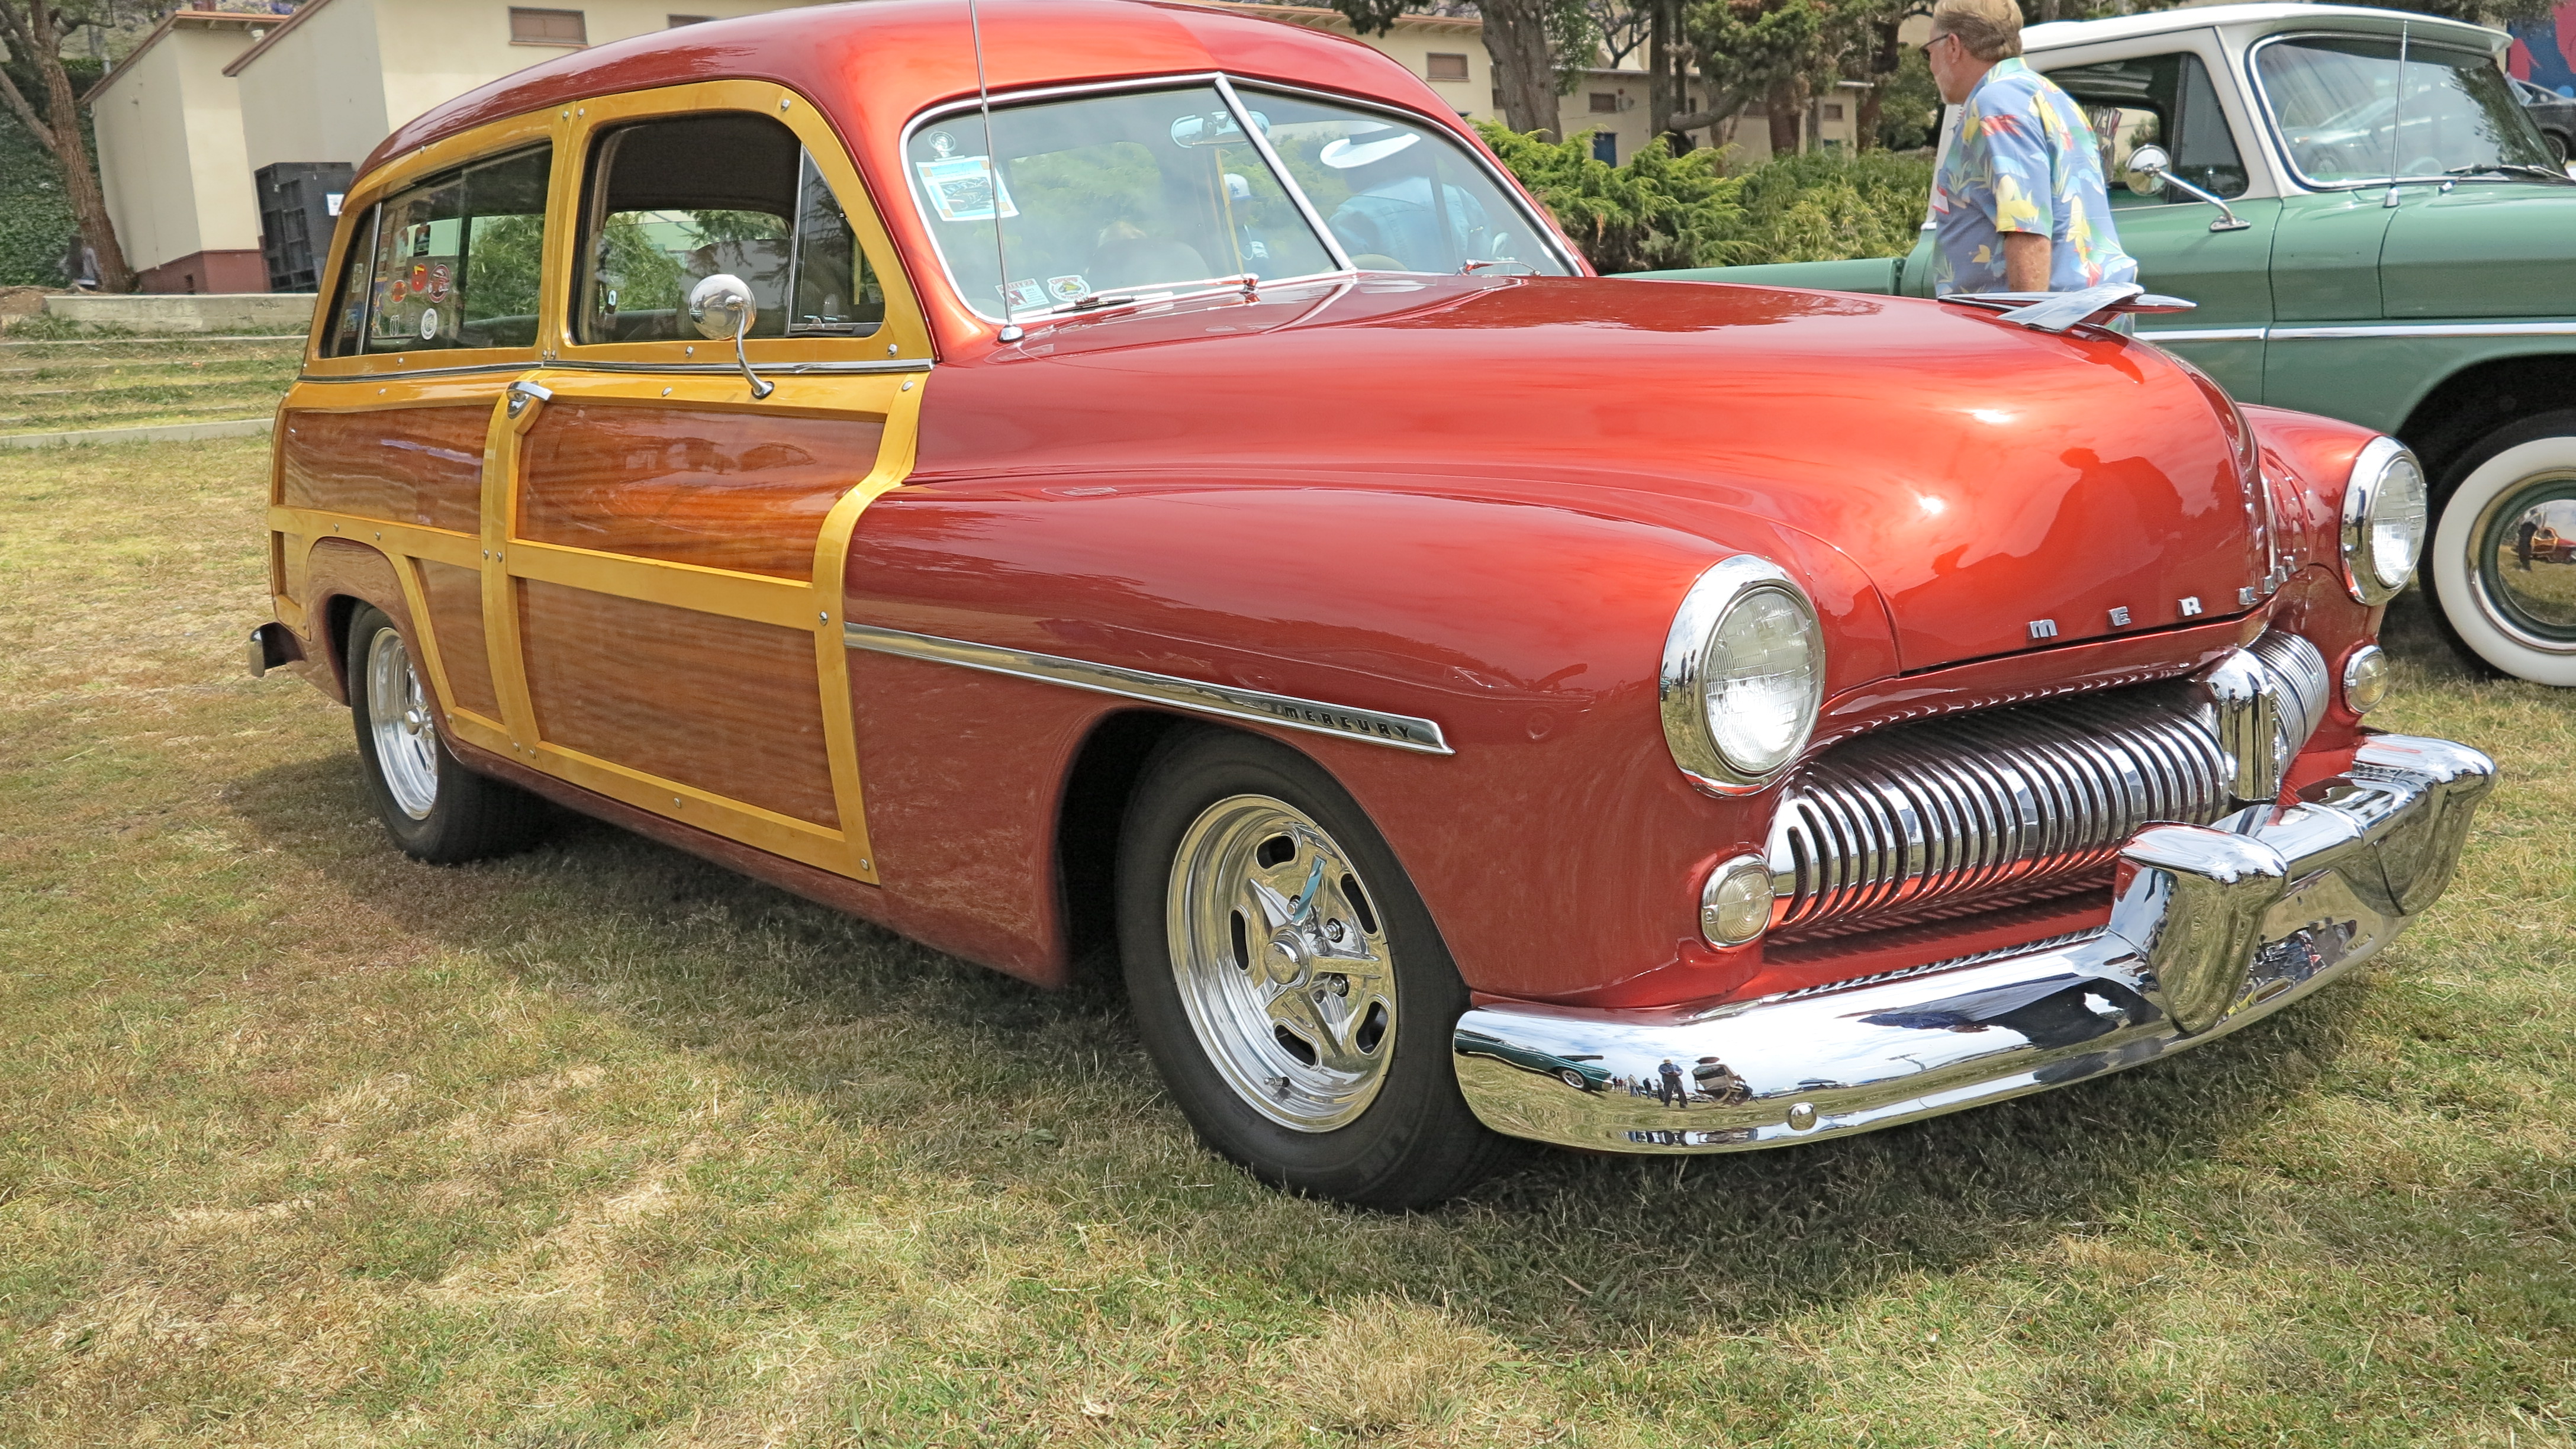 A marvelously restored Mercury Woody! (Joel Rothman photo)